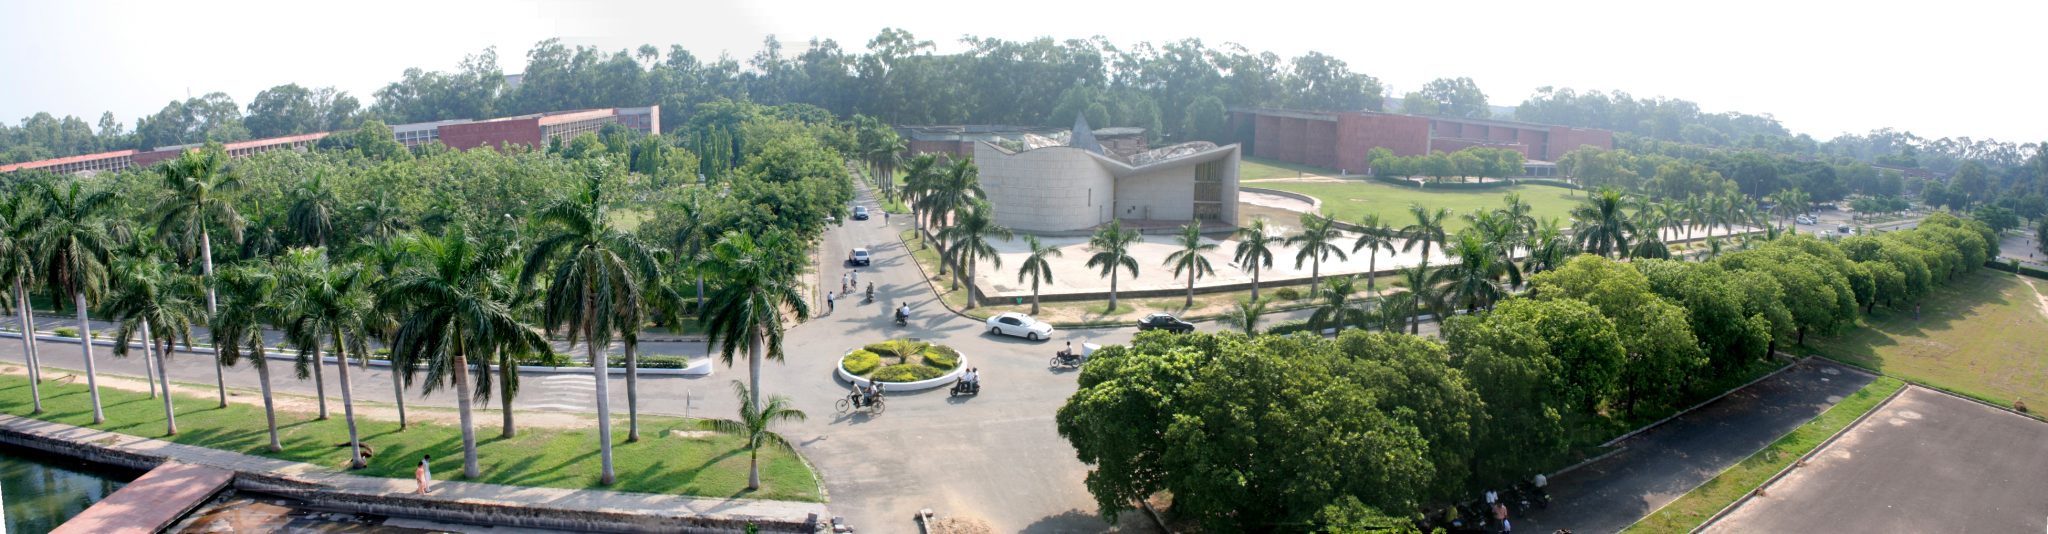 Panjab University in Chandigarh